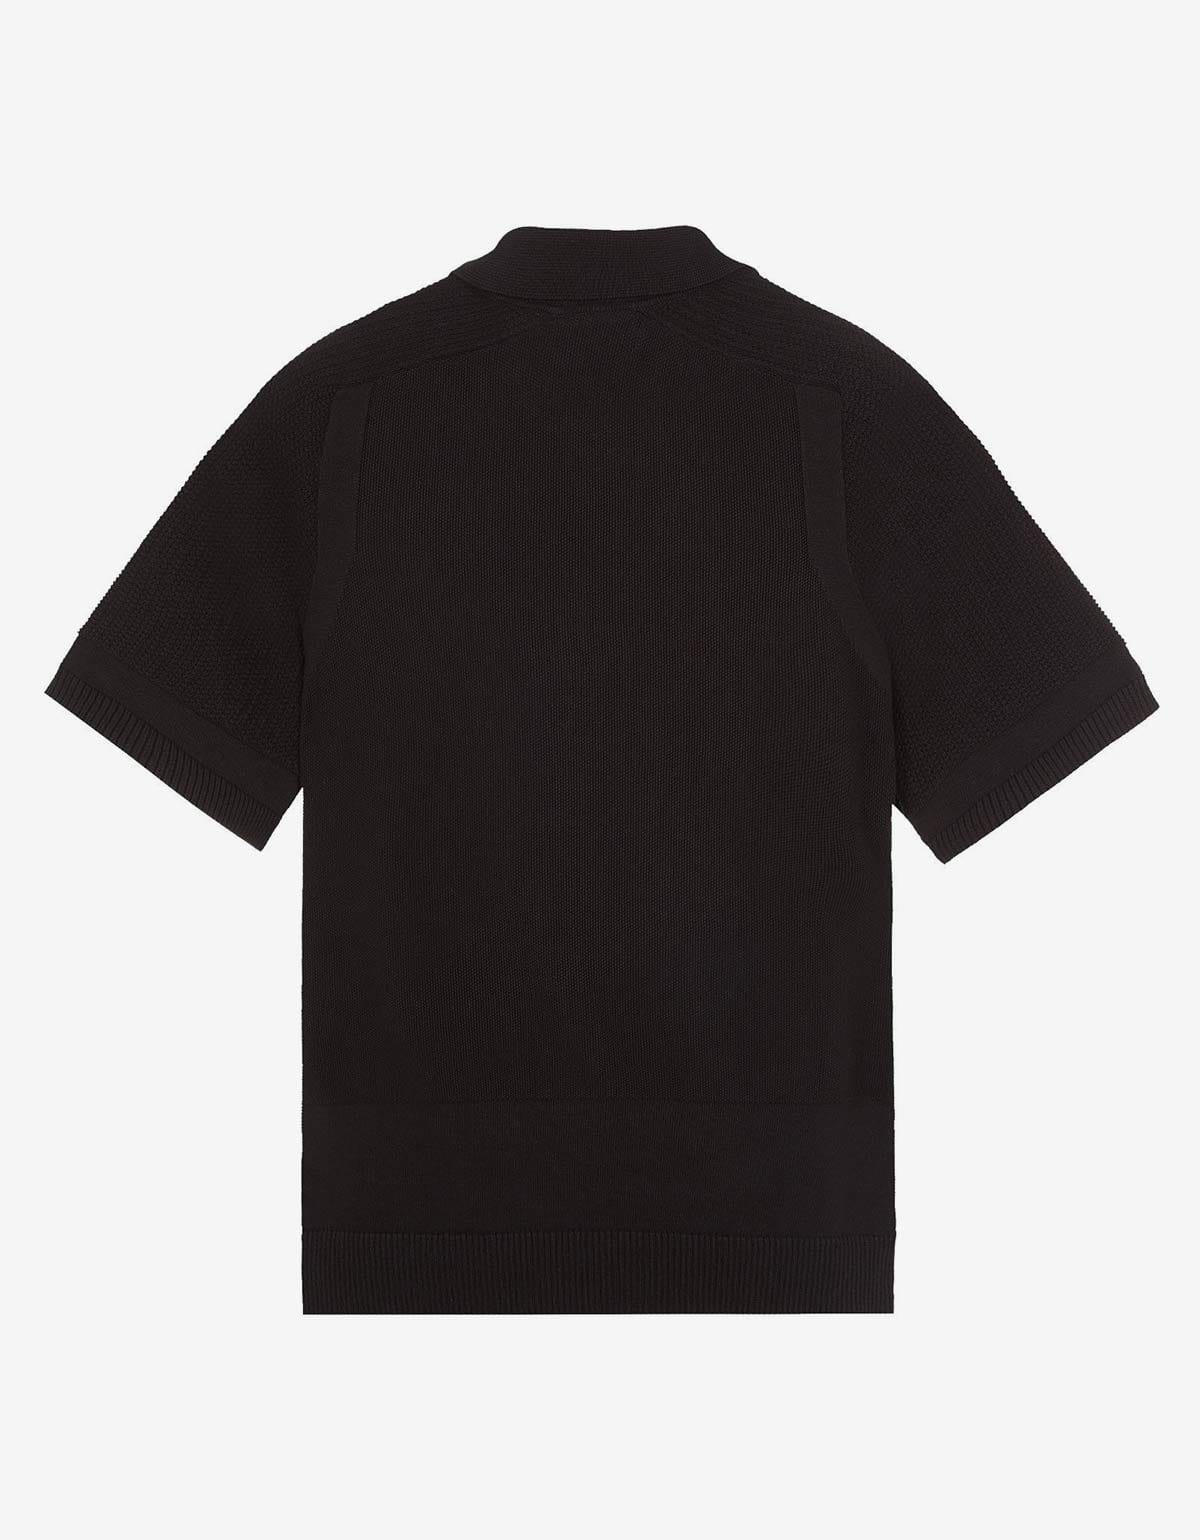 Stone Island Black Compass Logo Knitted Polo T-Shirt